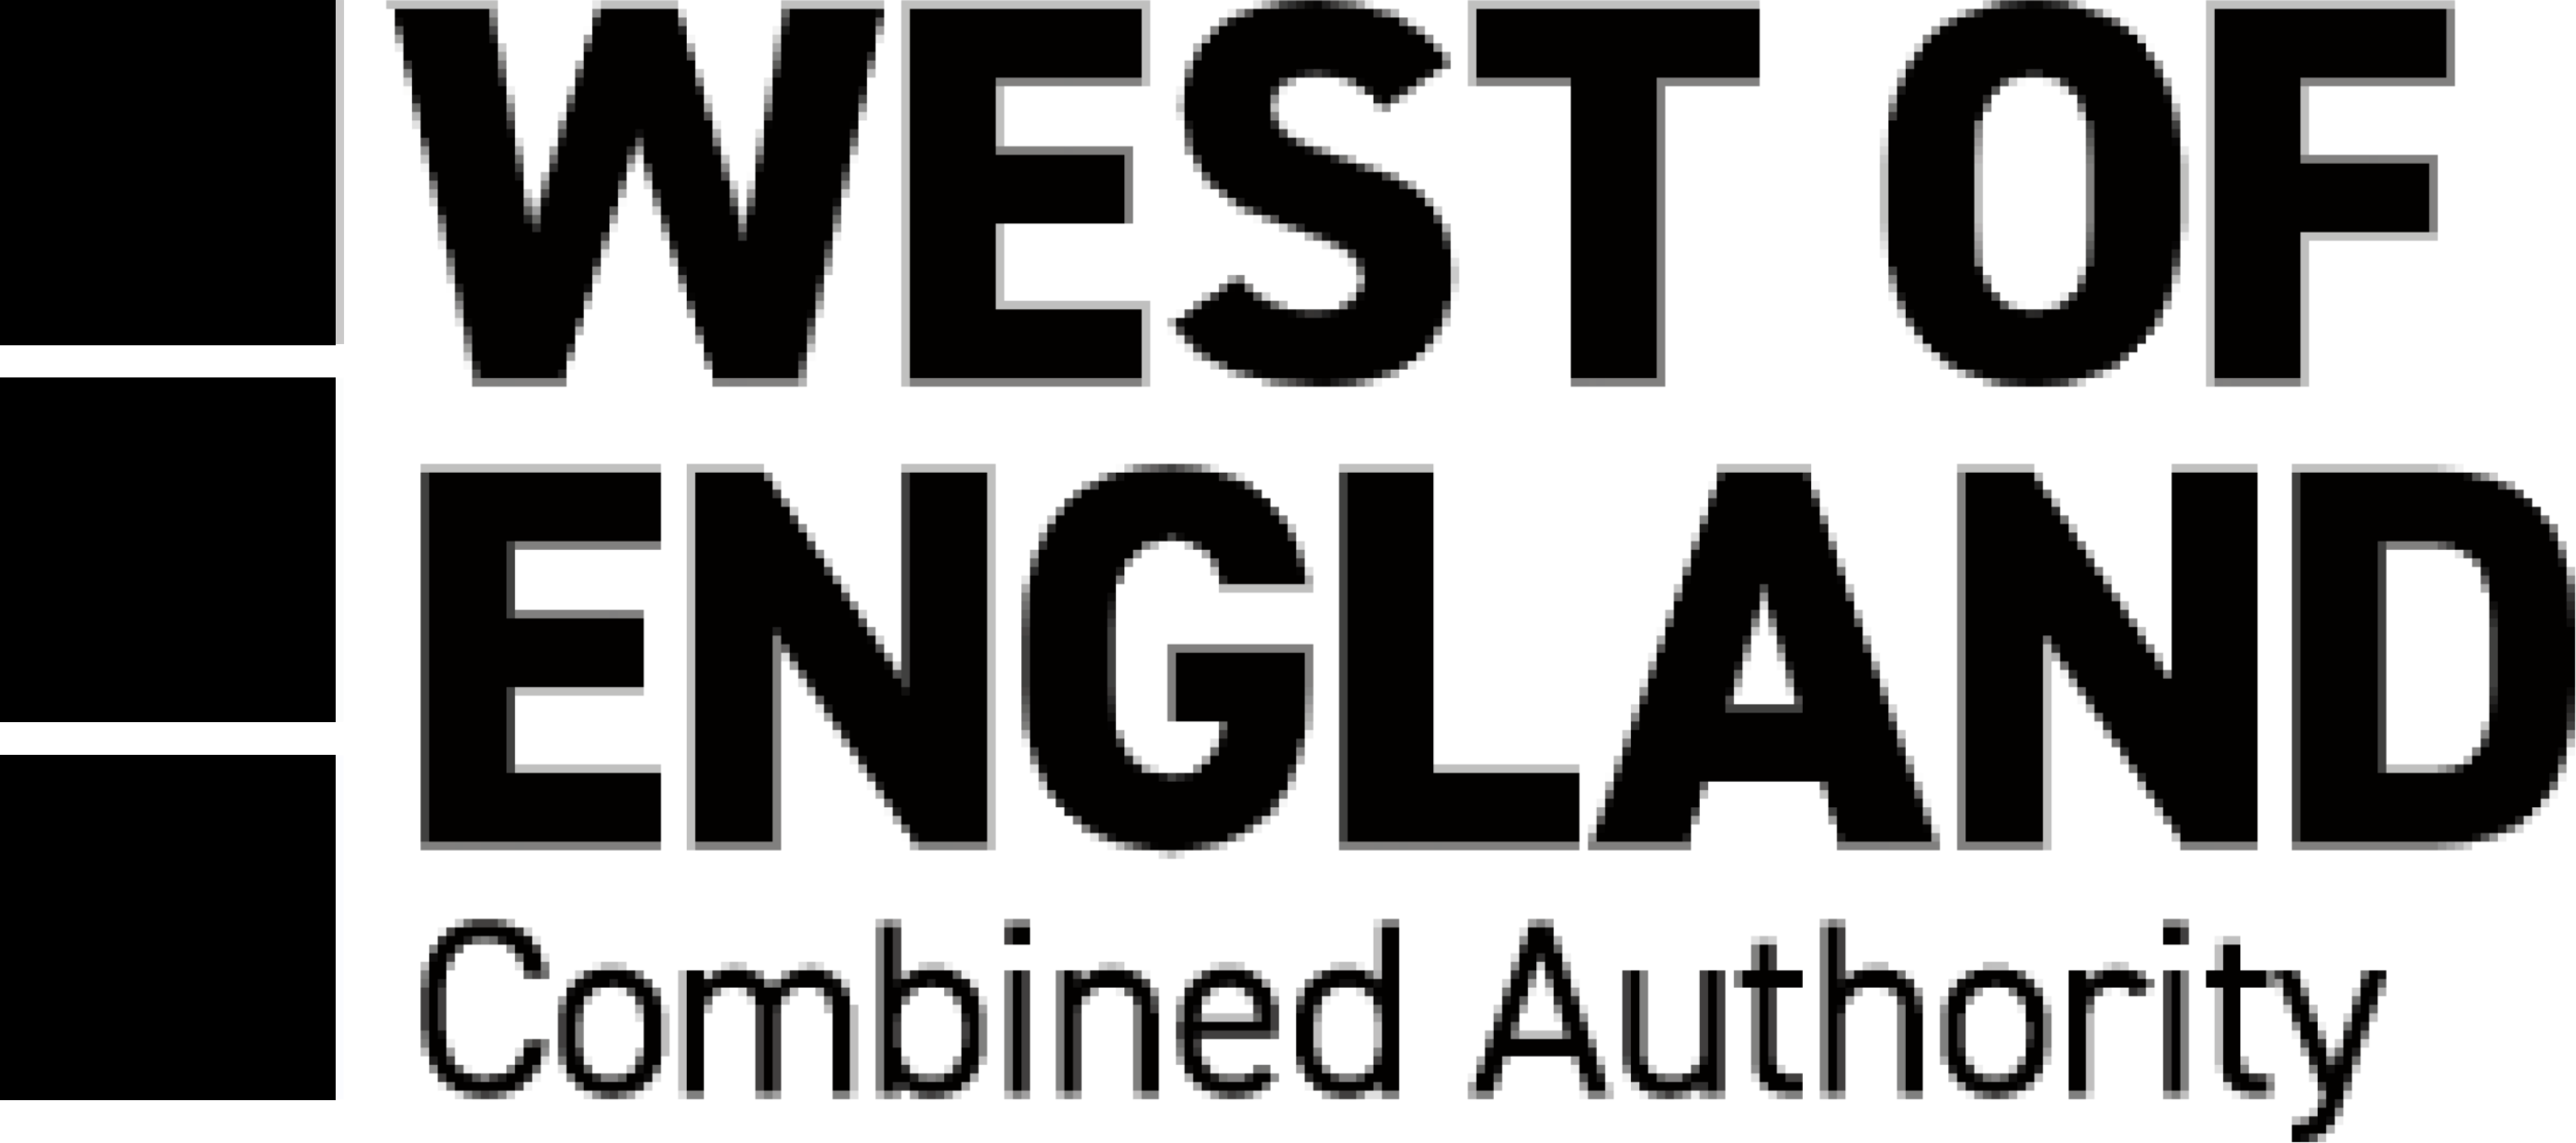 West of England Combined Authority logo